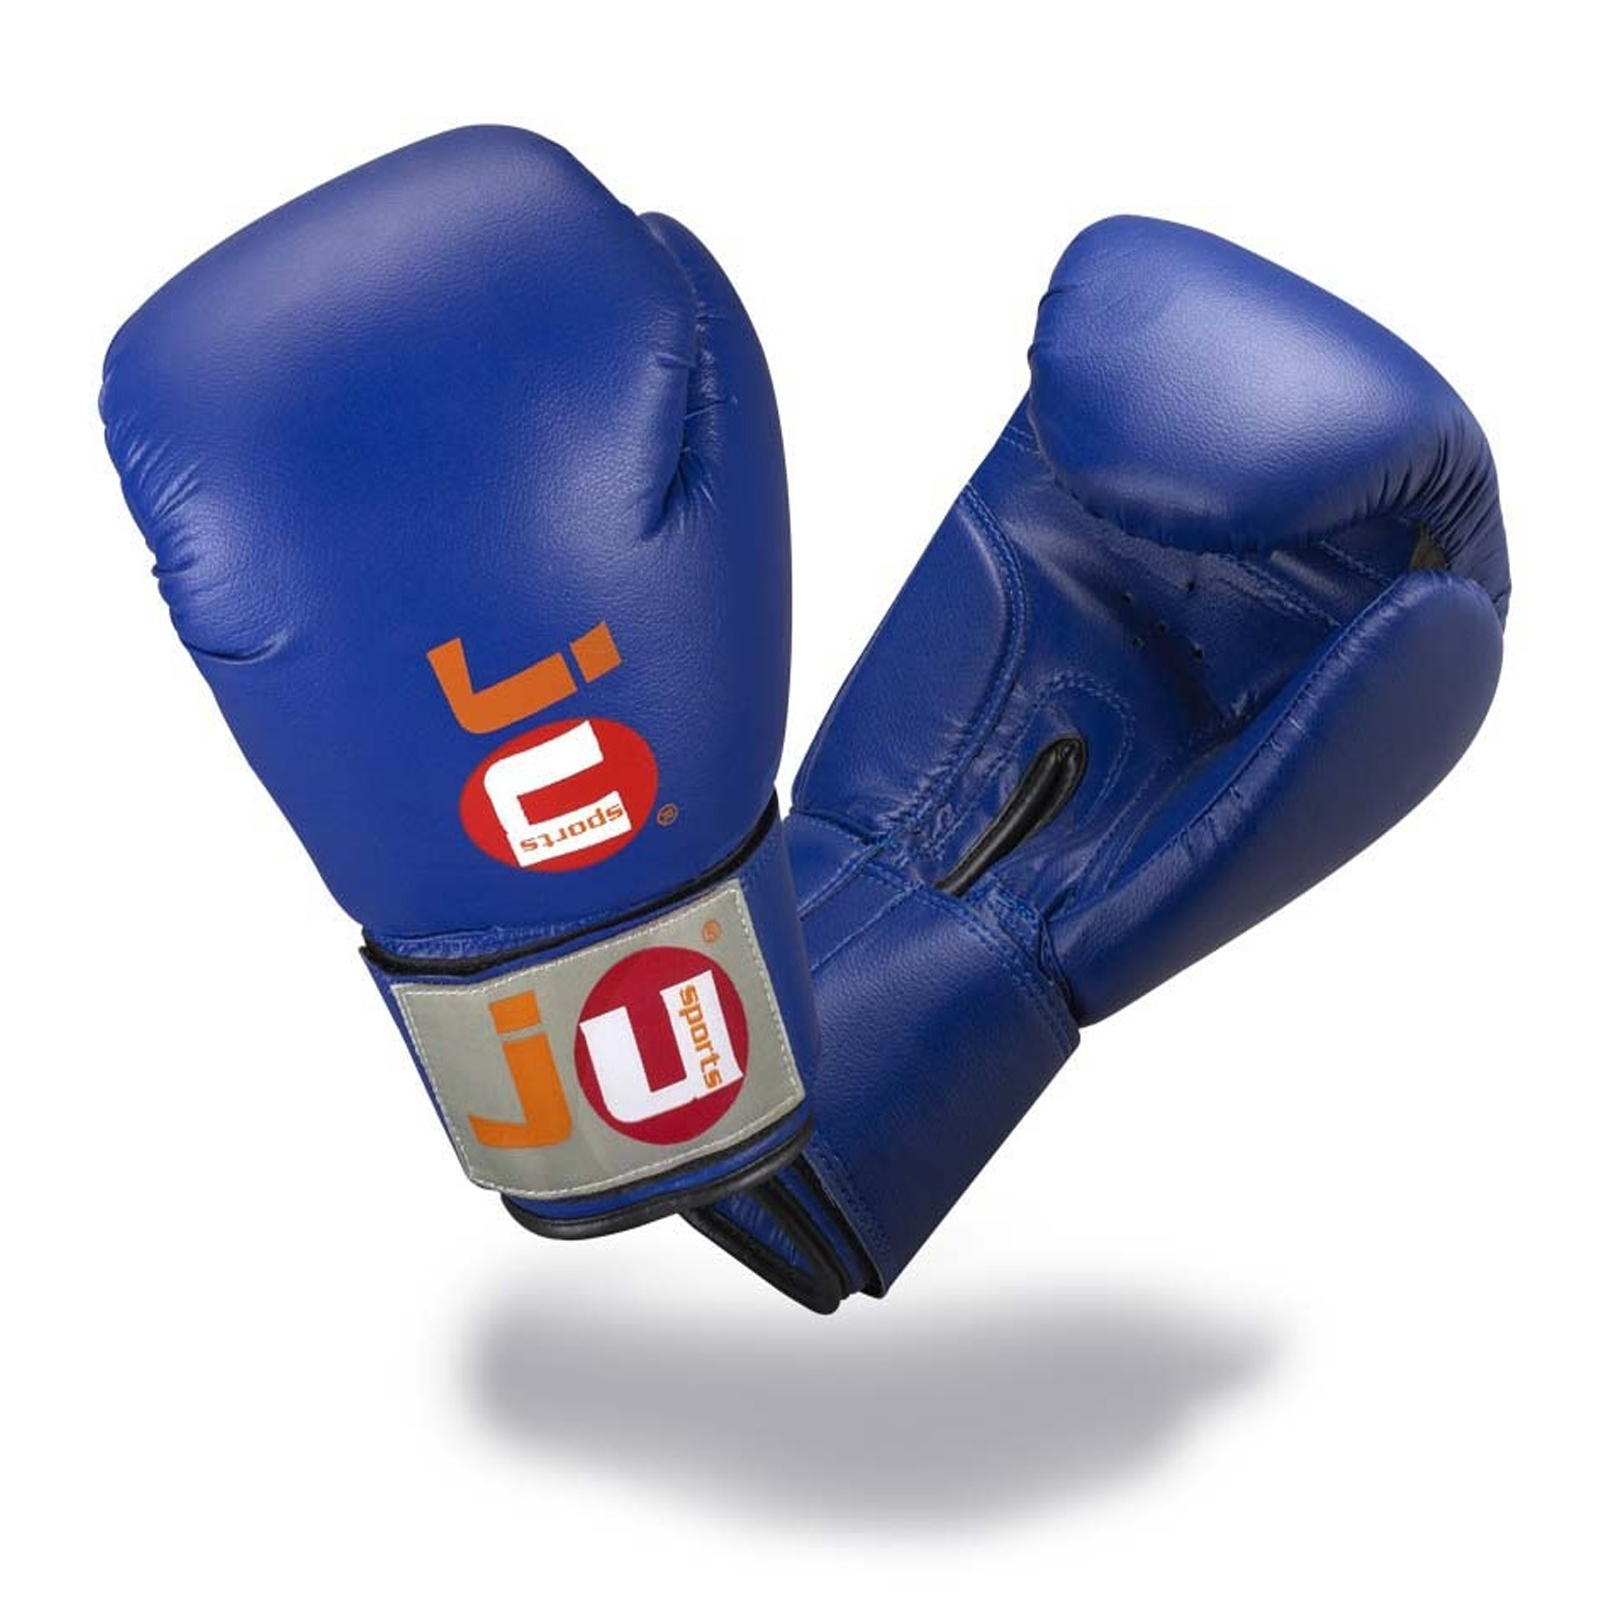 Ju-Sports Boxhandschuhe Training blau | KAMPFHELDEN